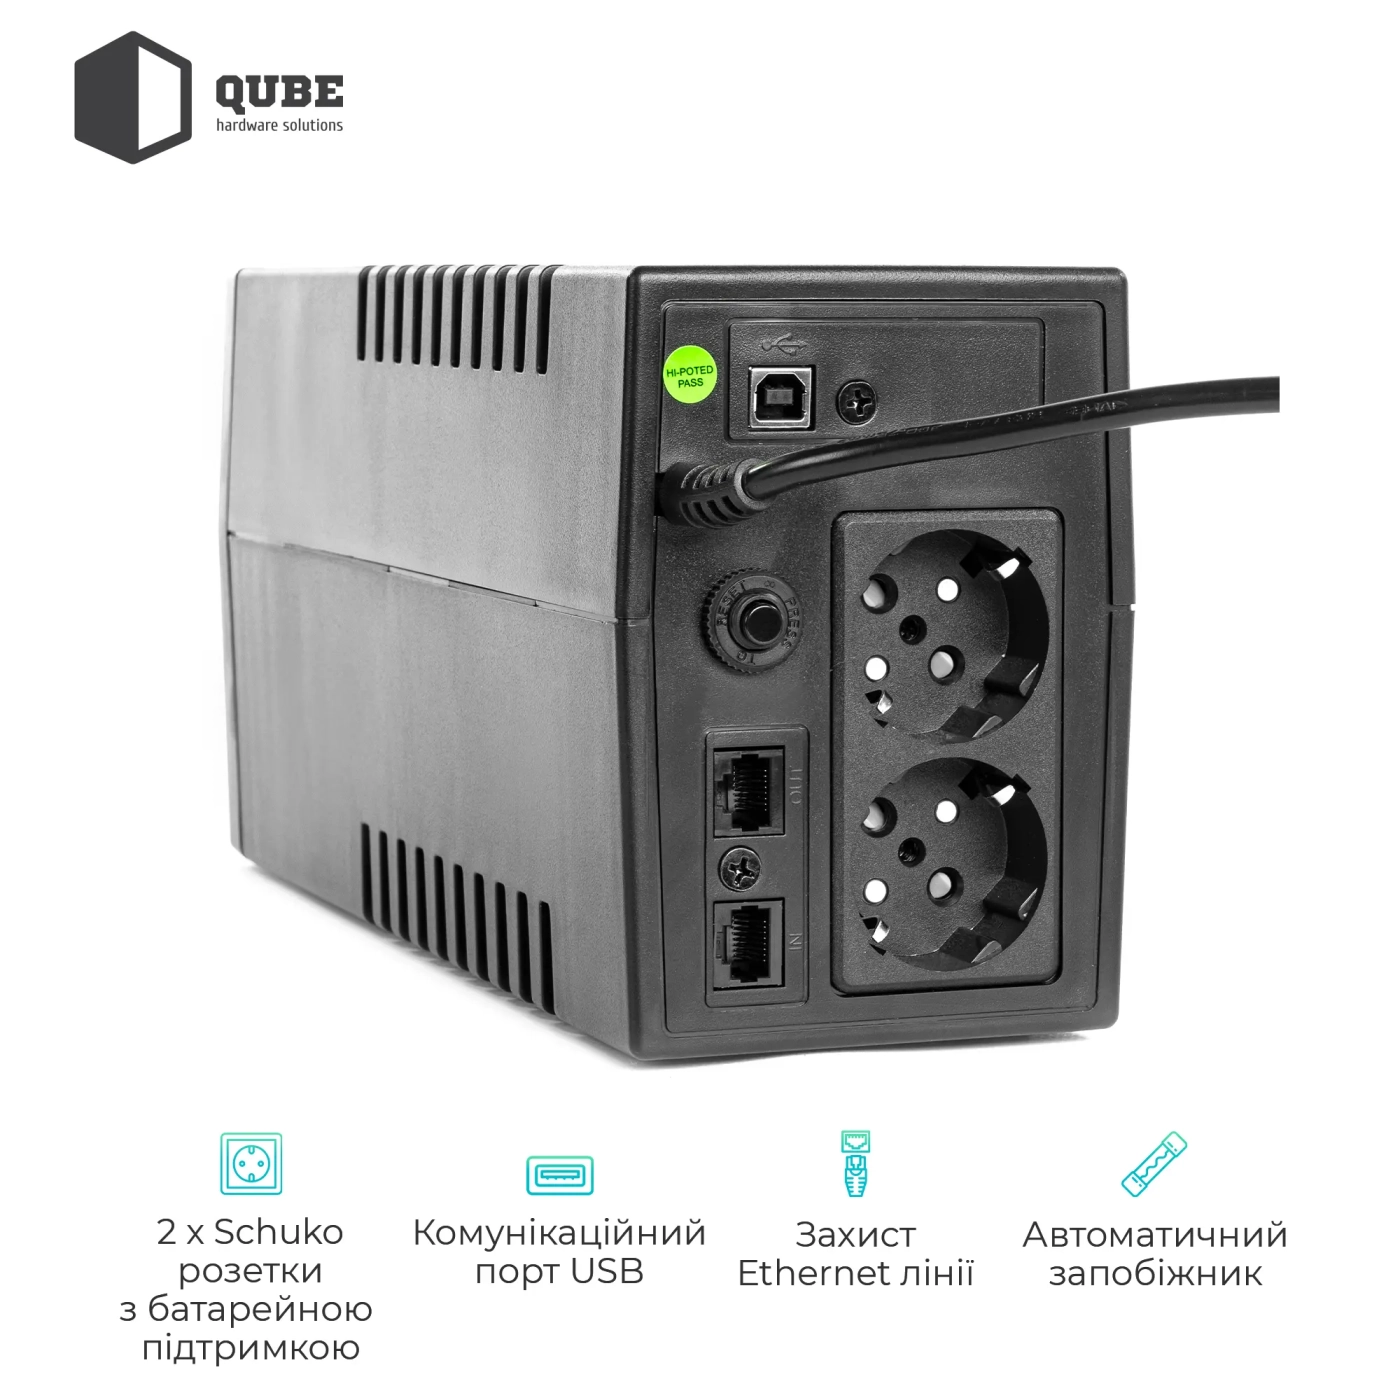 Купить ИБП (UPS) линейно-интерактивный Qube DG 850, 850VA/480W, LCD, 2 x Schuko, RJ-45, USB - фото 4